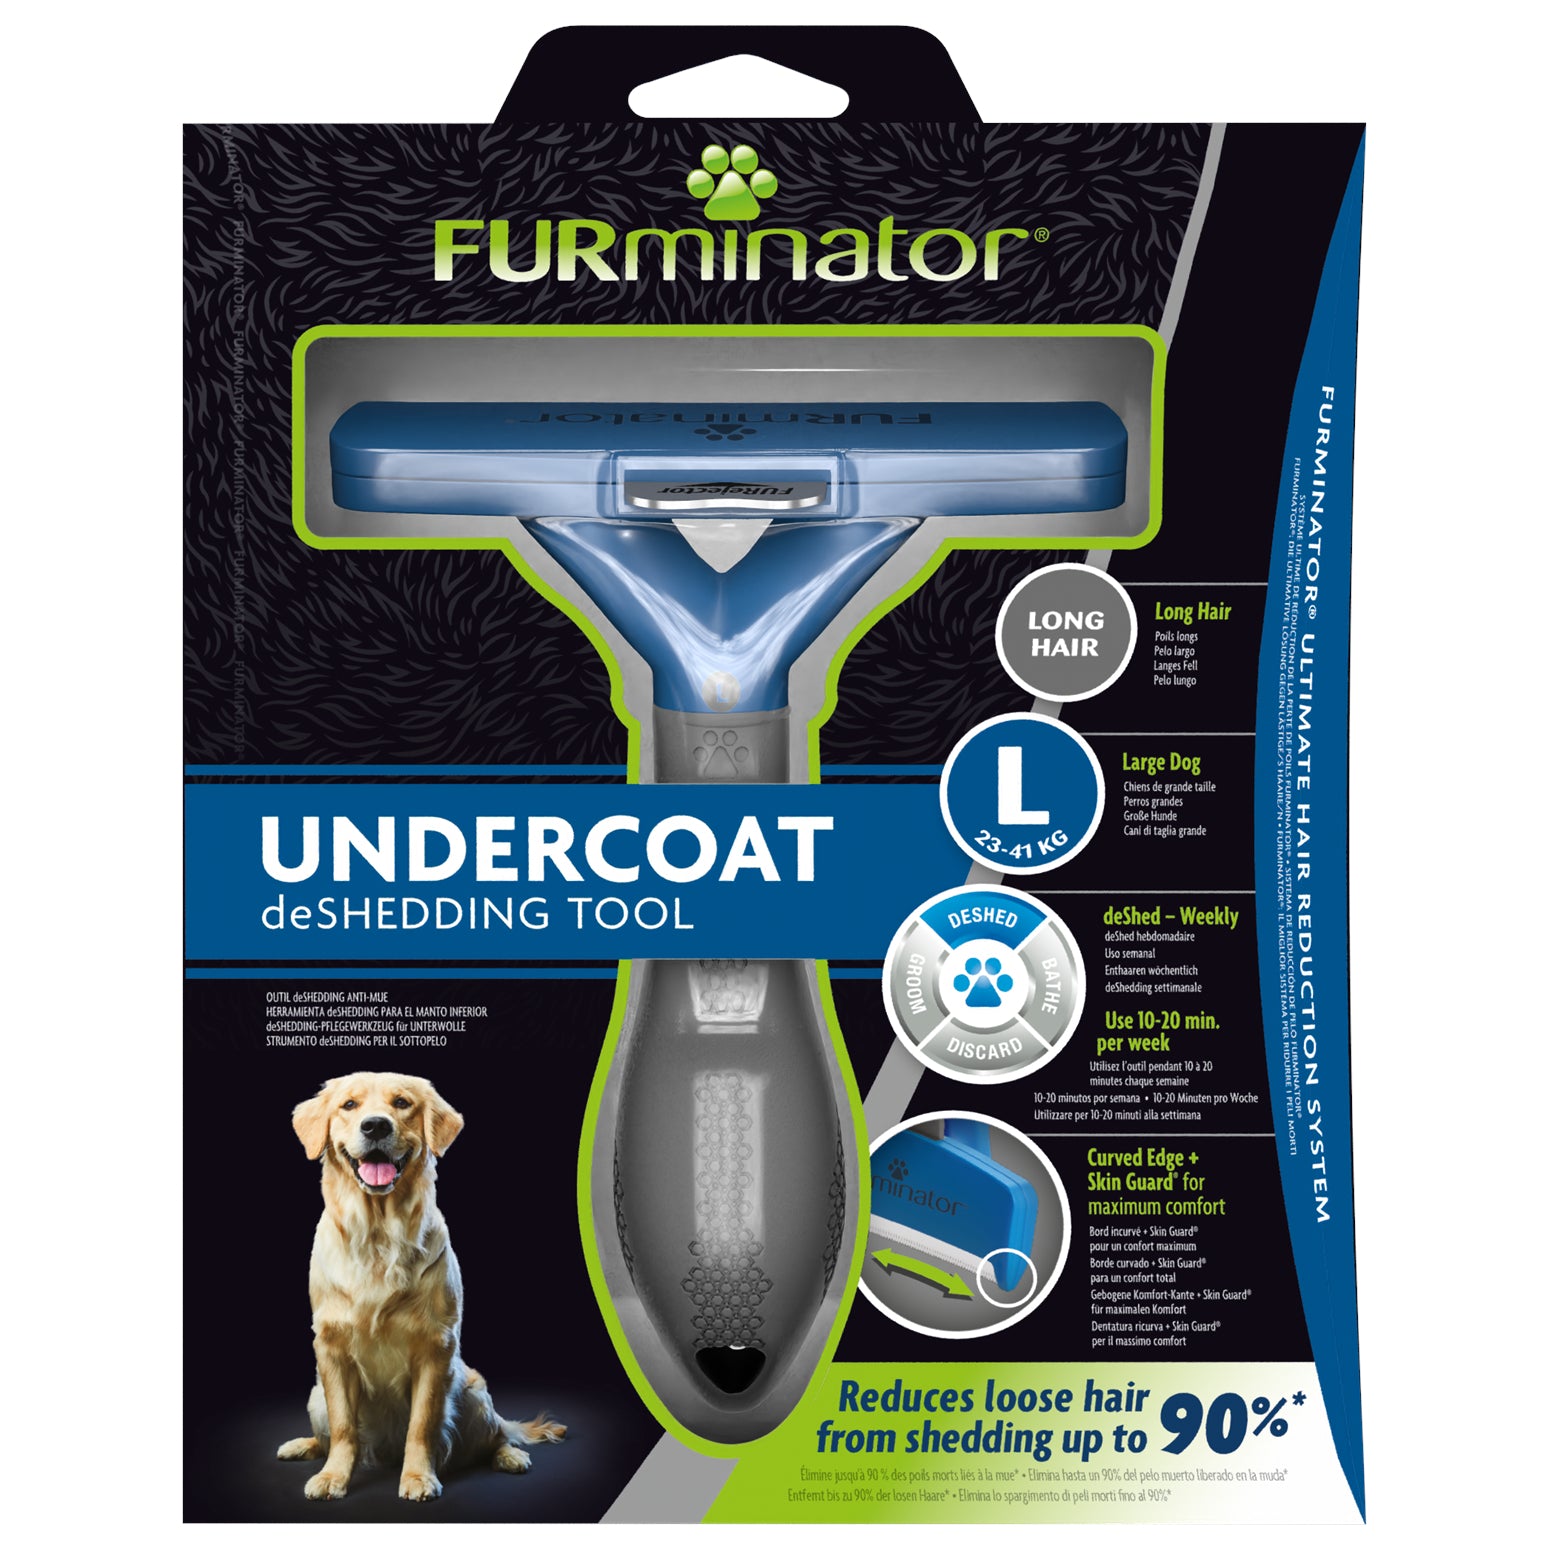 FURminator Undercoat deShedding Tools for Large Dogs